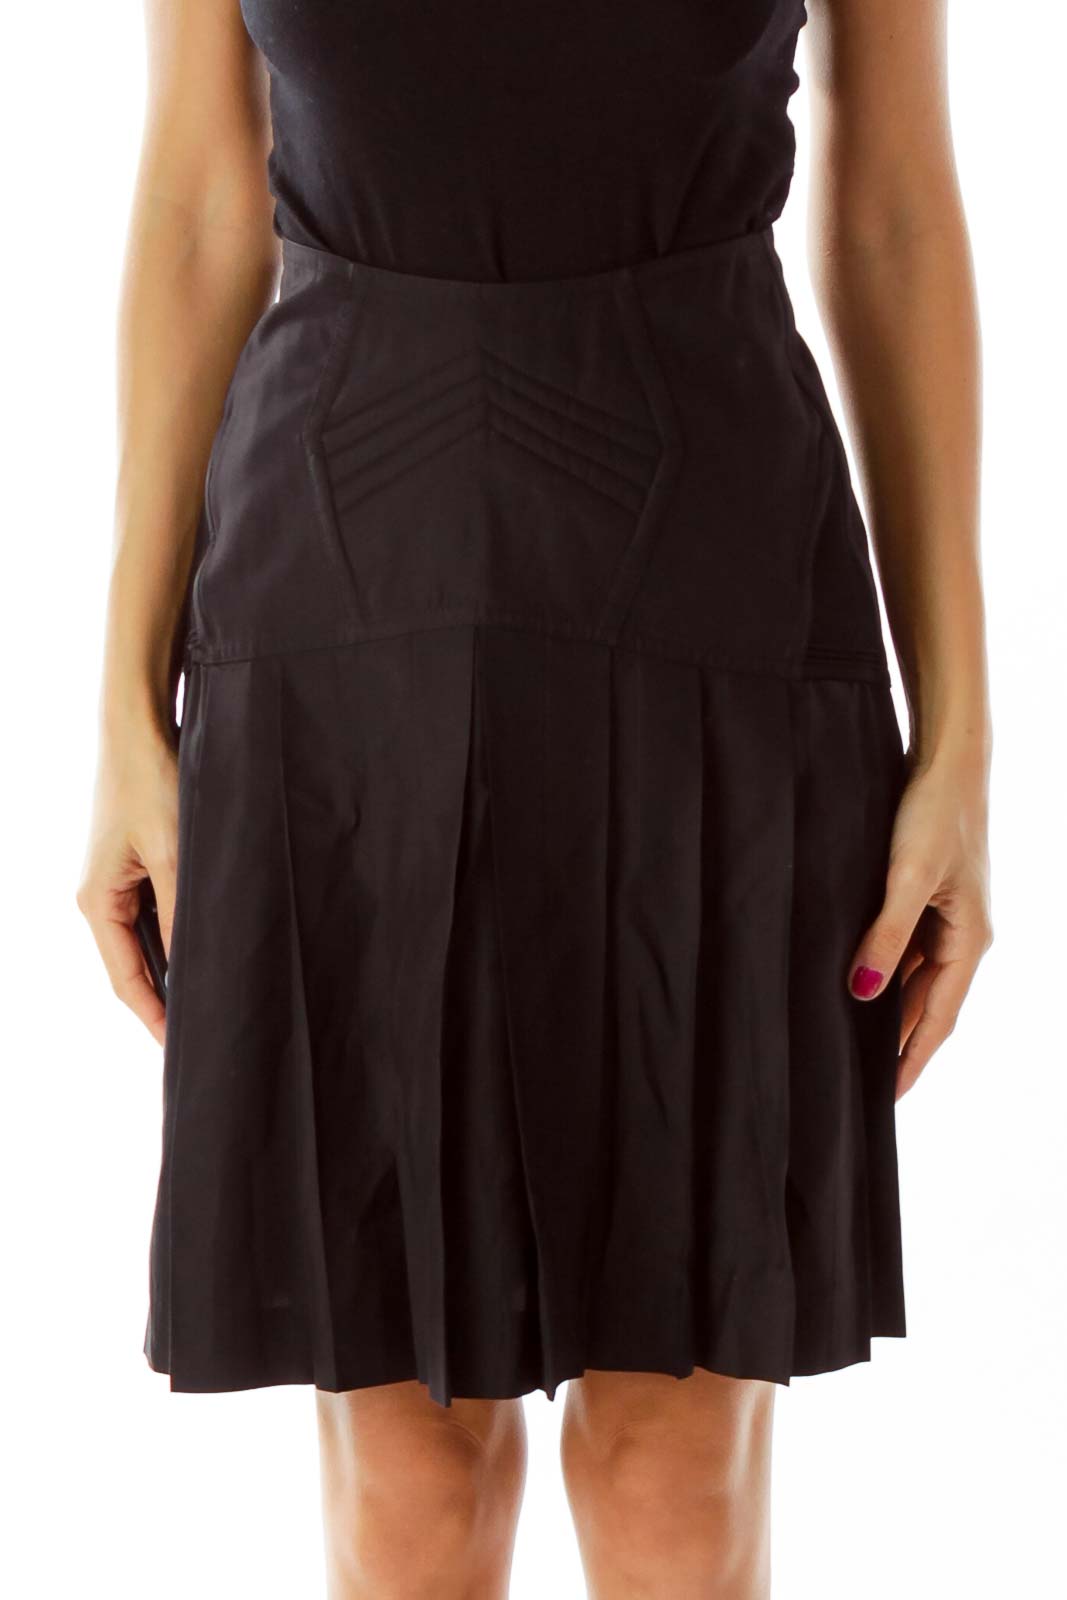 Black Lace Up Peplum Skirt Front